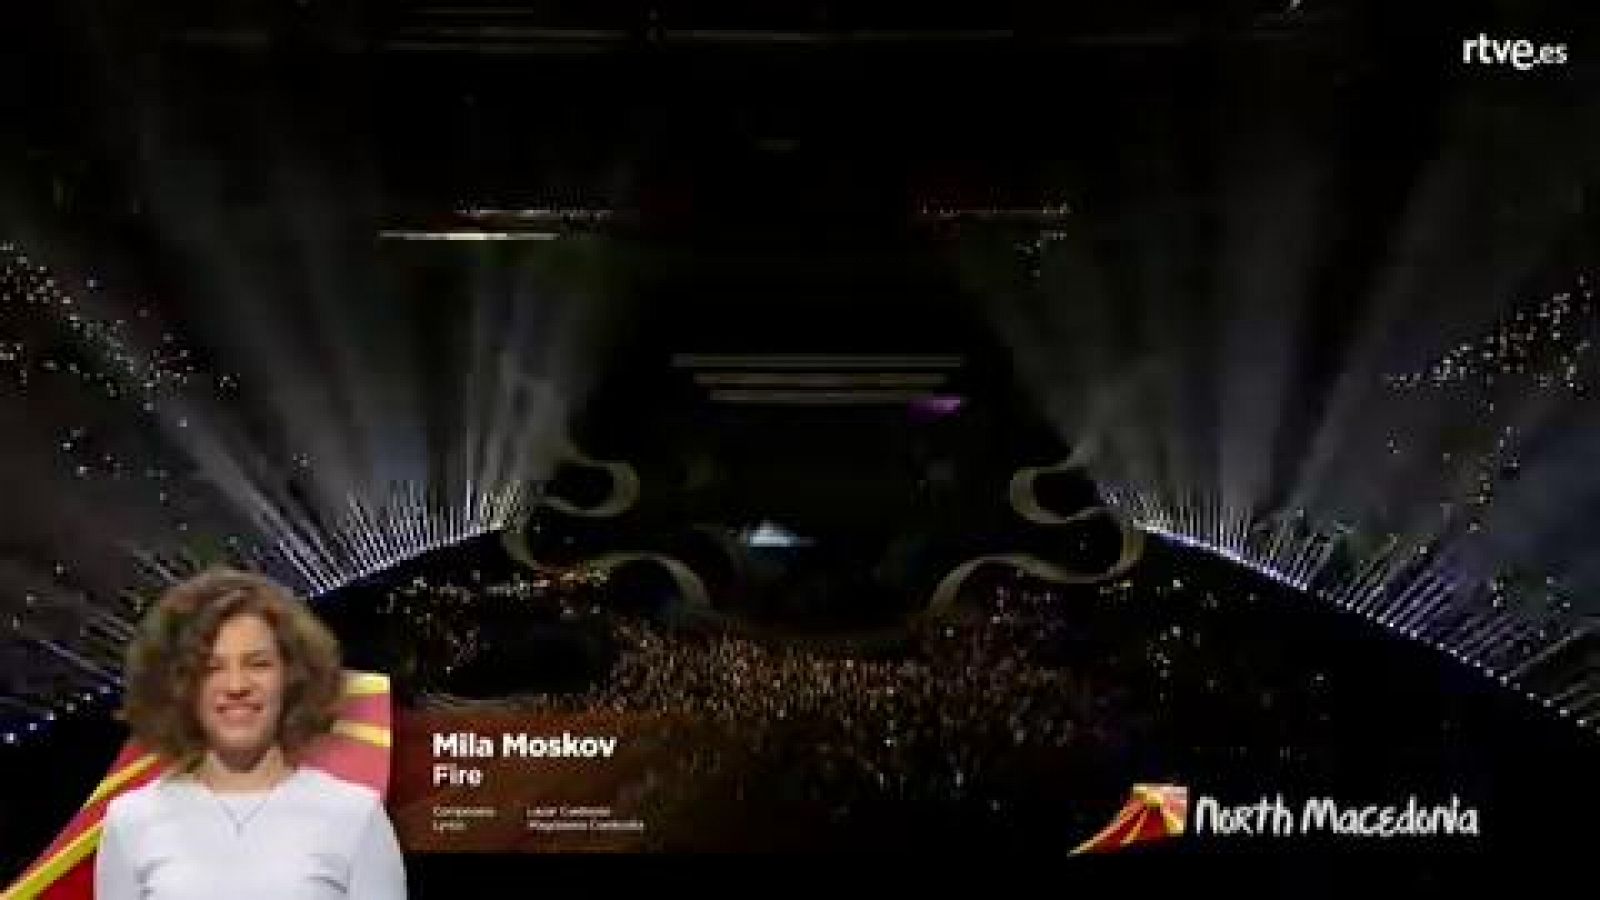 Eurovision Junior - Macedonia del Norte canta "Fire" - RTVE.es 